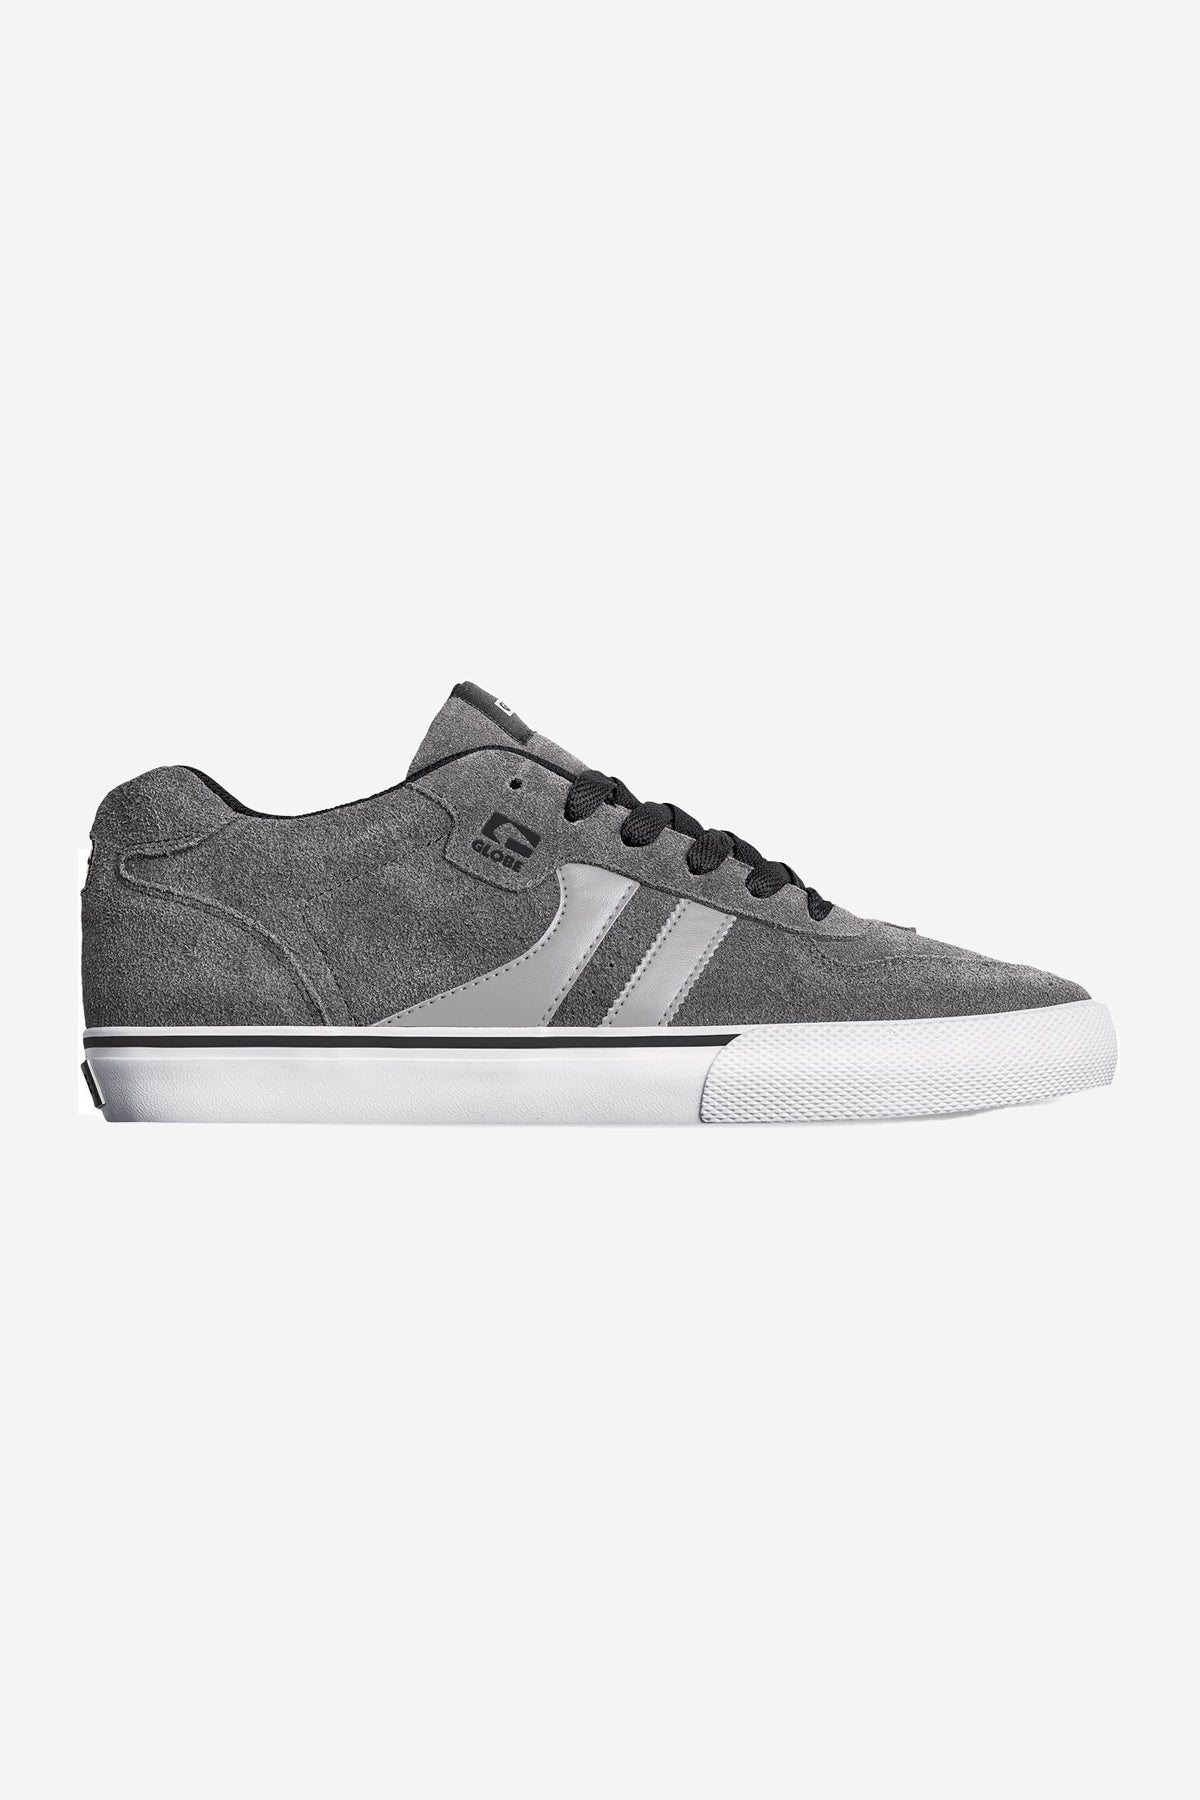 Globe - Encore 2 - Charcoal/Grey - skateboard Chaussures